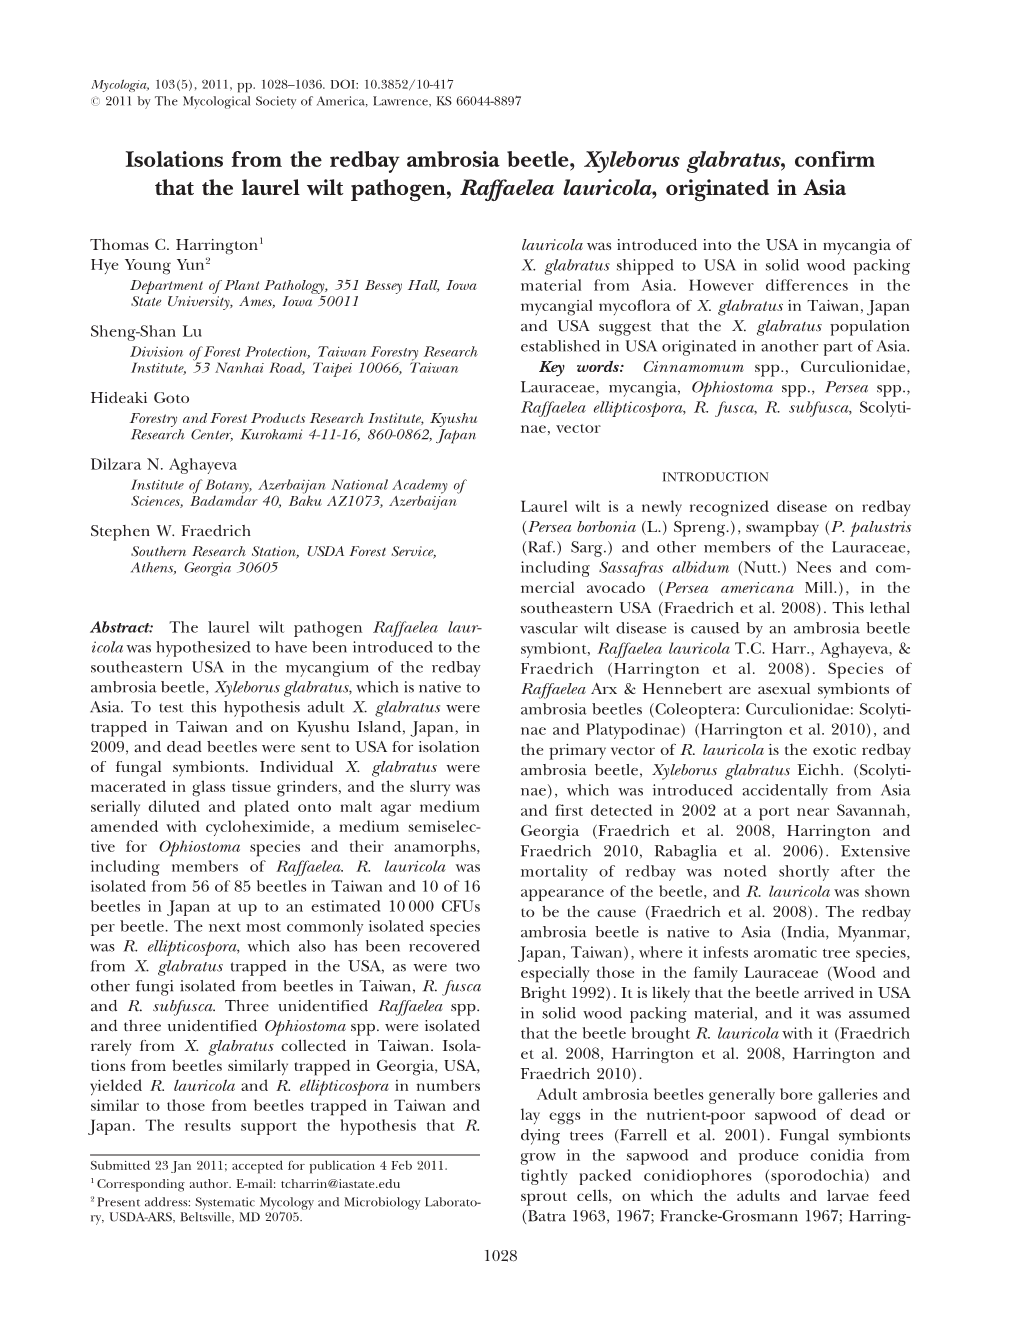 Isolations from the Redbay Ambrosia Beetle, Xyleborus Glabratus, Confirm That the Laurel Wilt Pathogen, Raffaelea Lauricola, Originated in Asia